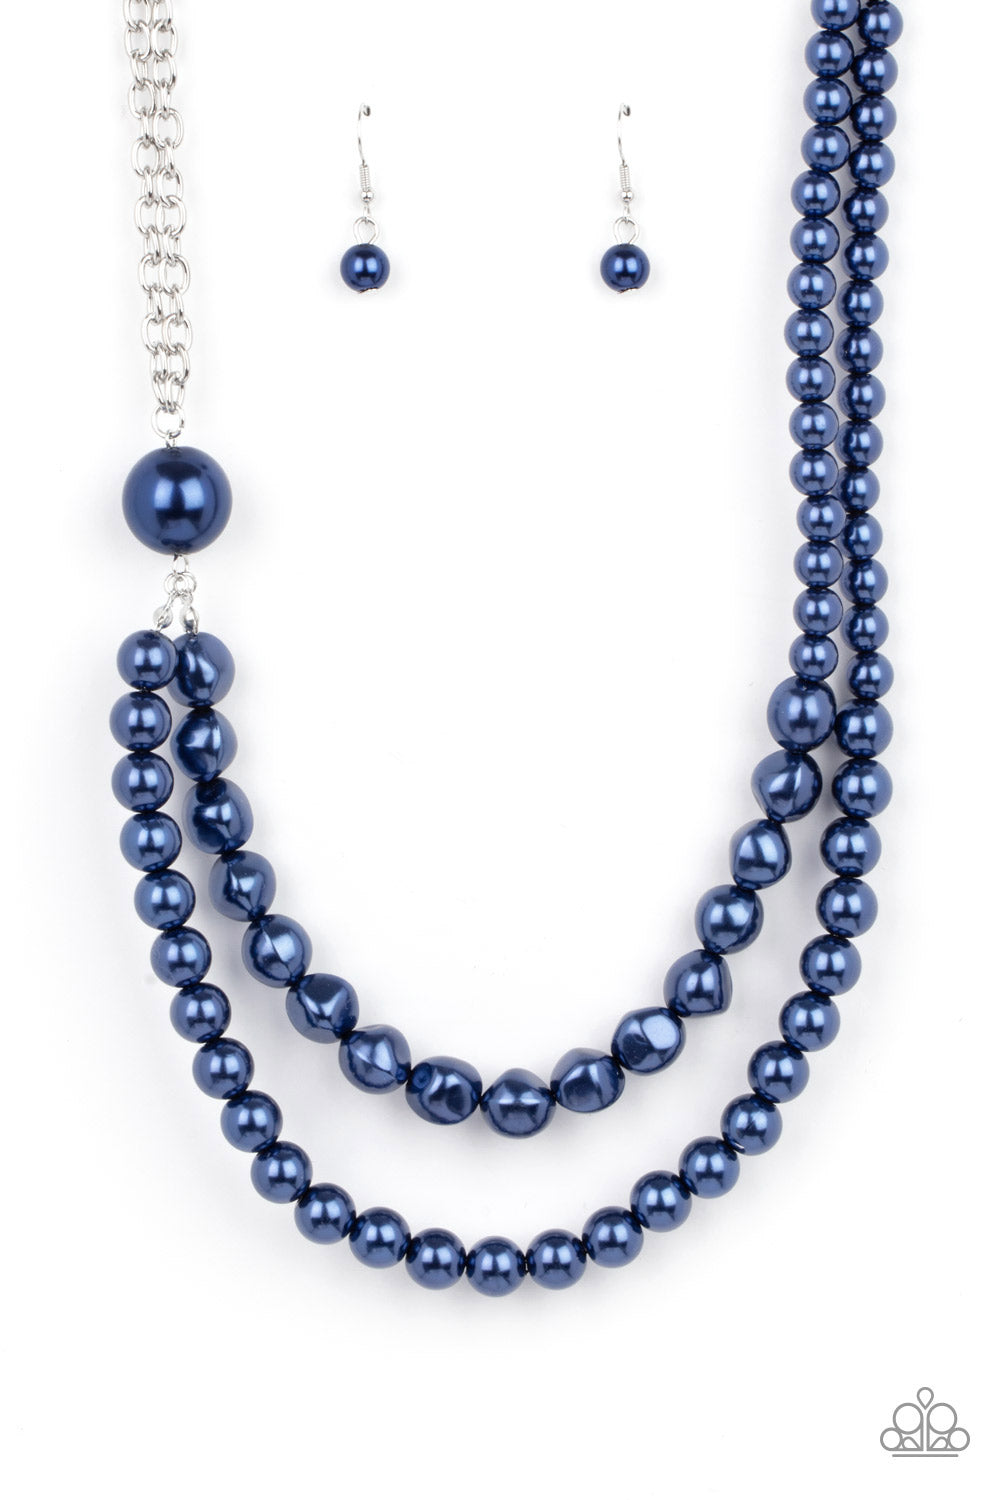 Remarkable Radiance - Blue necklace B070